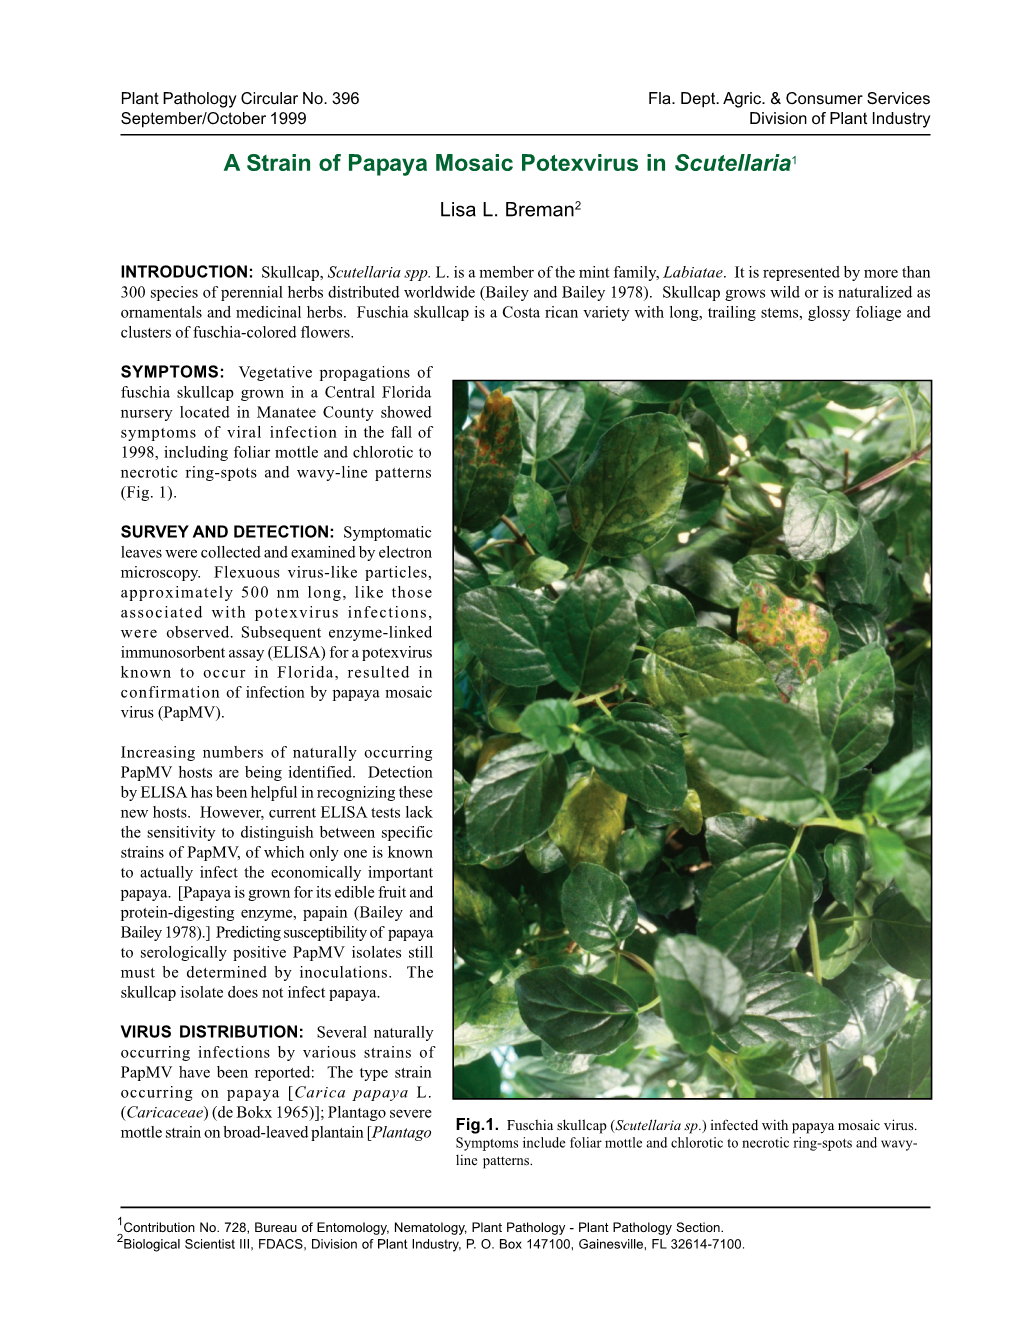 A Strain of Papaya Mosaic Potexvirus in Scutellaria1